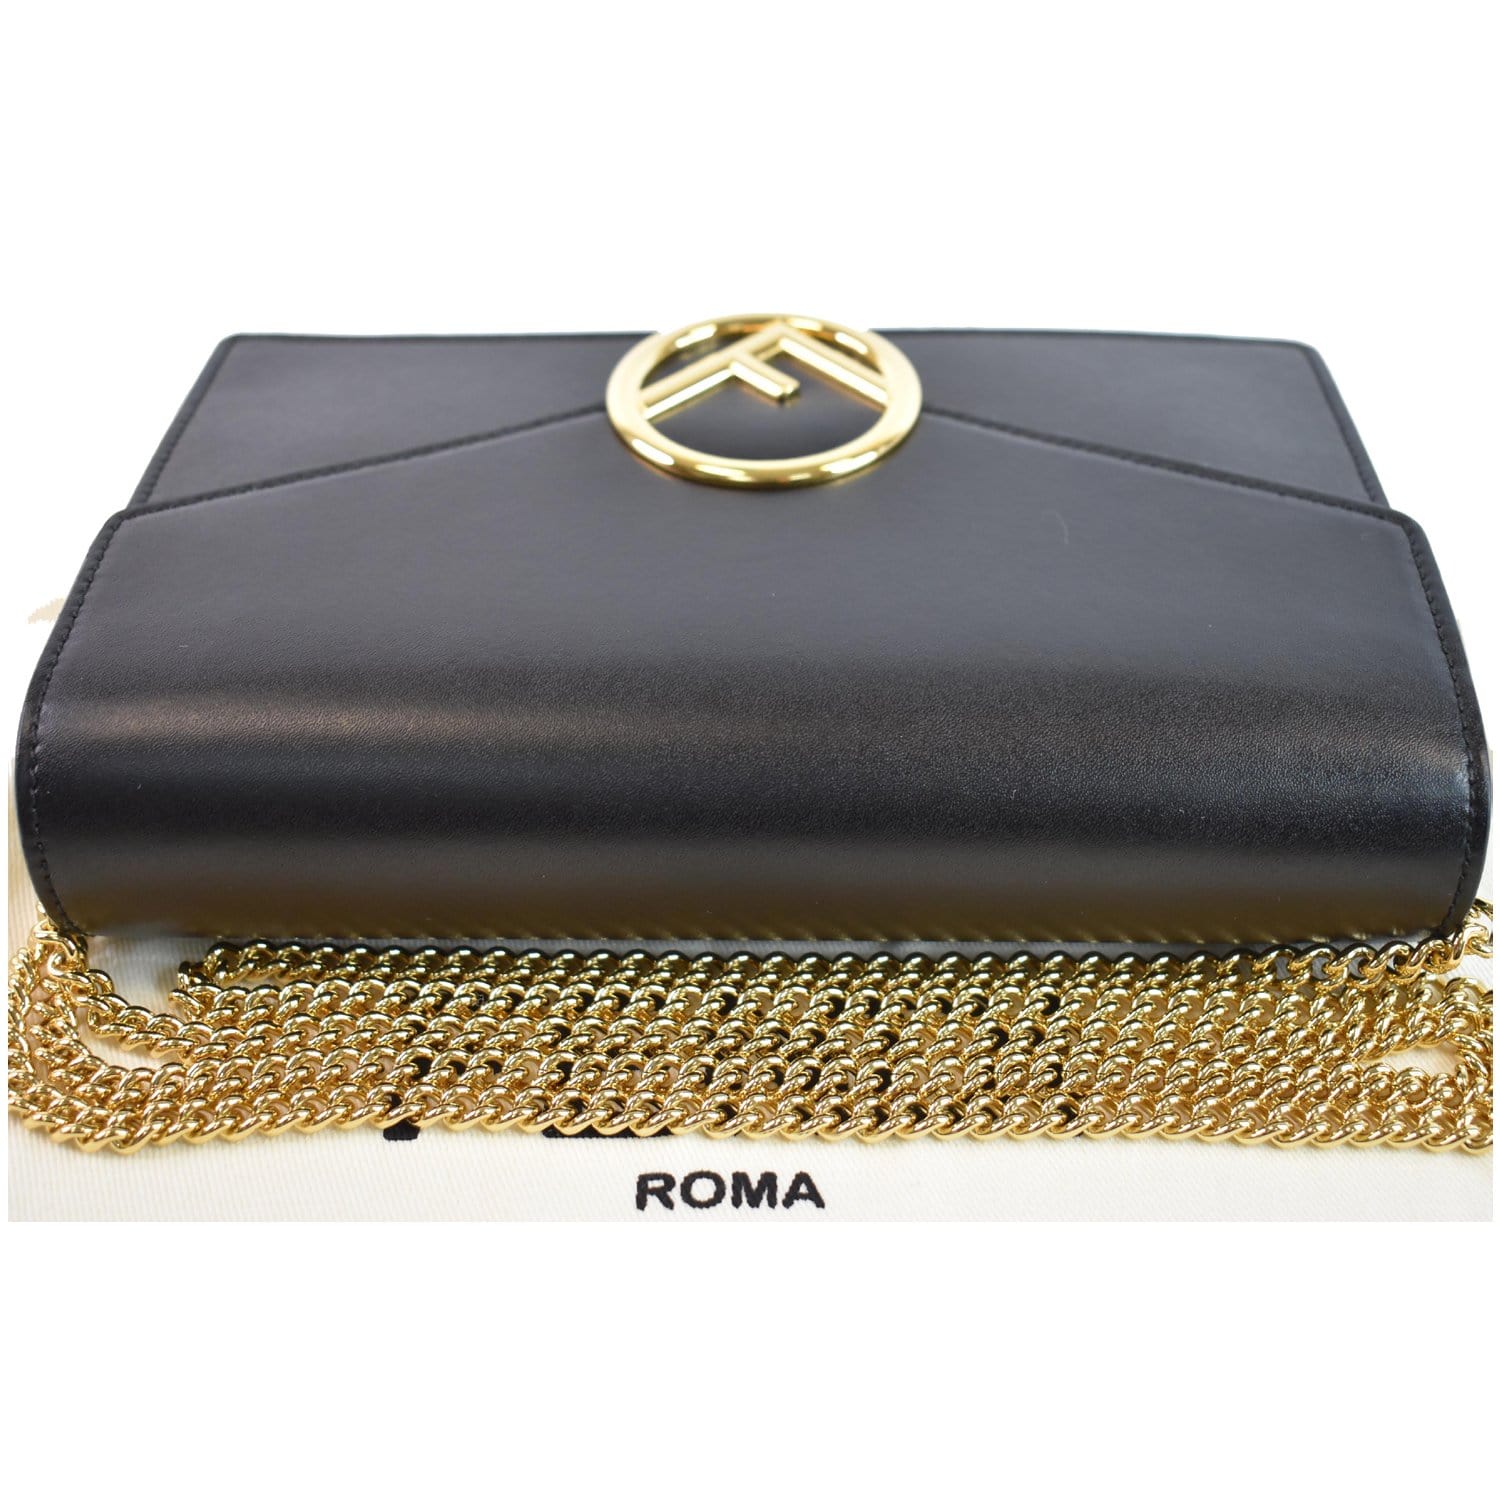 ⚡️SOLD⚡️Dissona Italian leather envelope crossbody